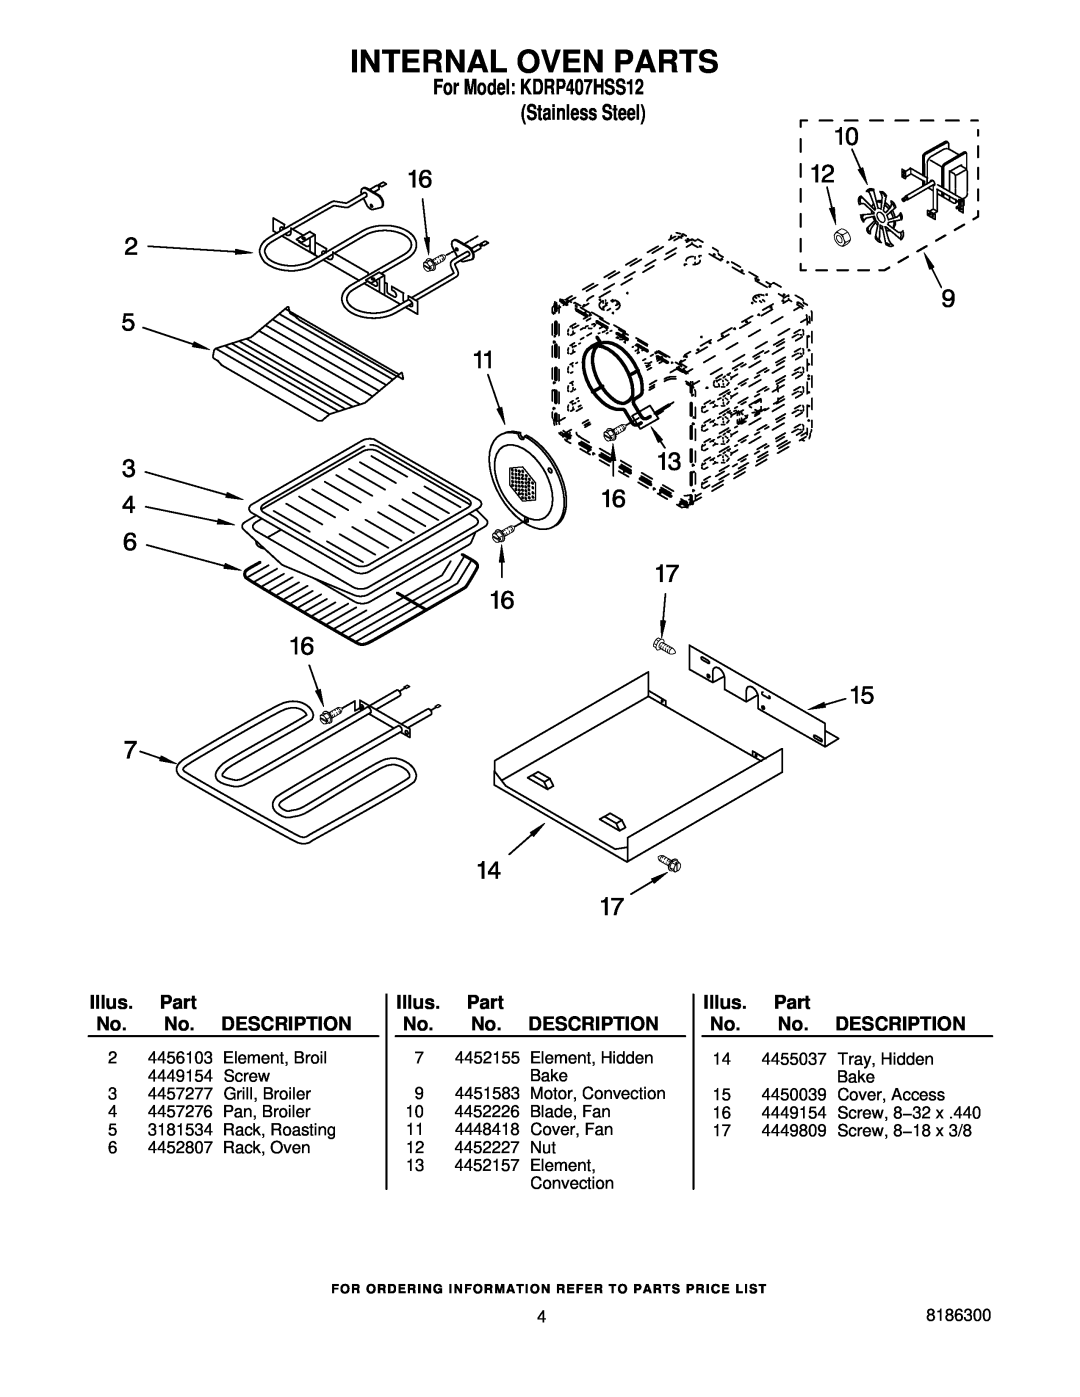 KitchenAid manual Internal Oven Parts, For Model KDRP407HSS12 Stainless Steel, Illus. Part No. No. DESCRIPTION 